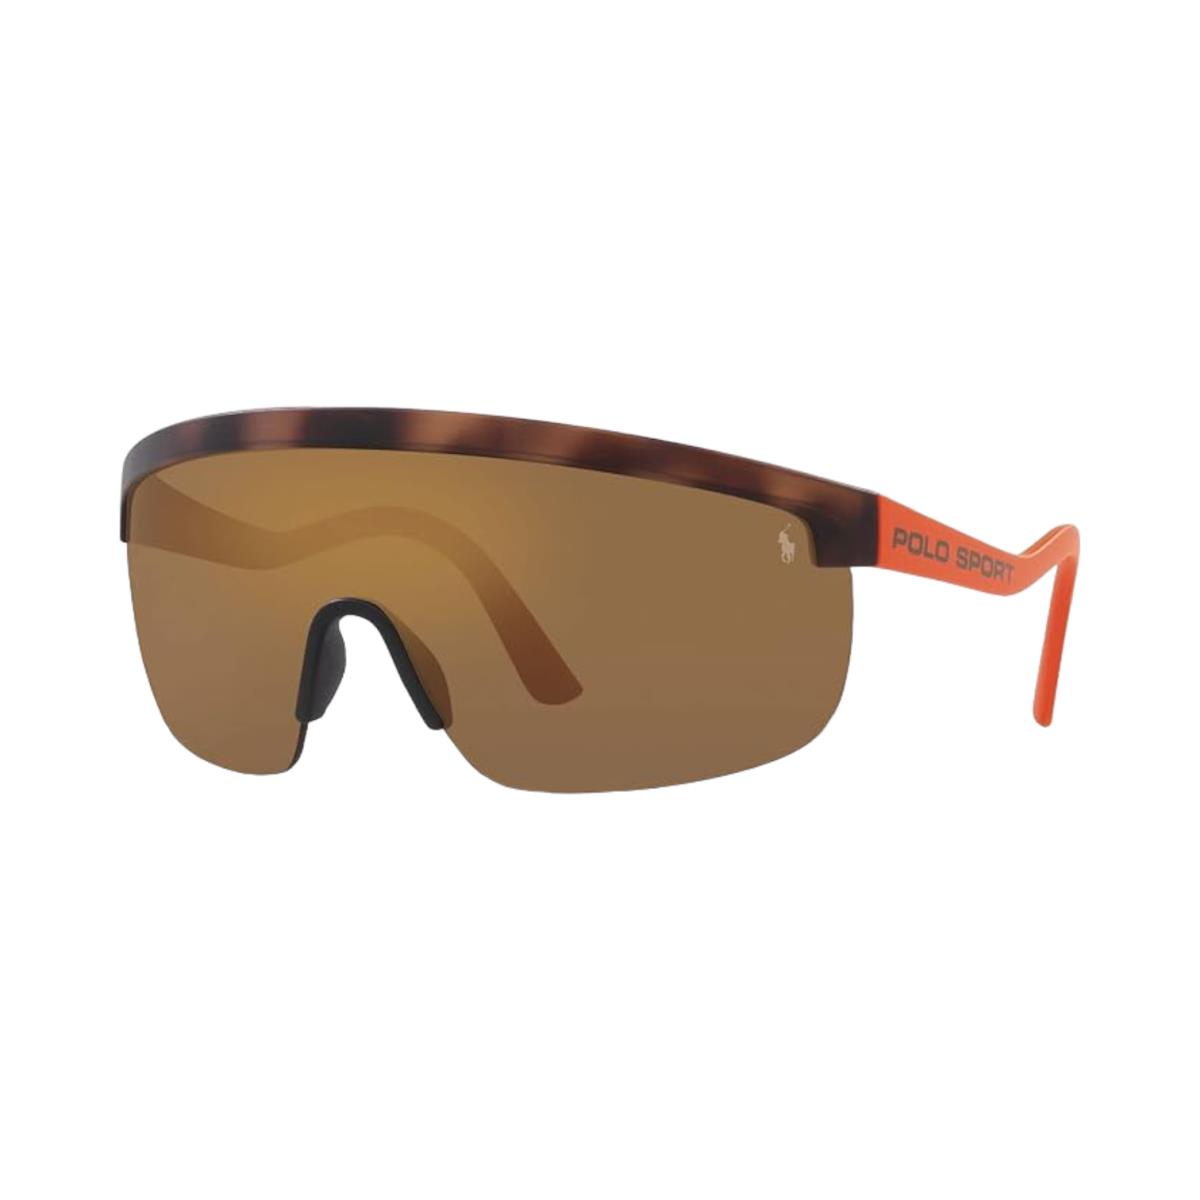 Mens Polo Ralph Lauren Ph4156 Shield Sunglasses - Matte Brown Havana Frame